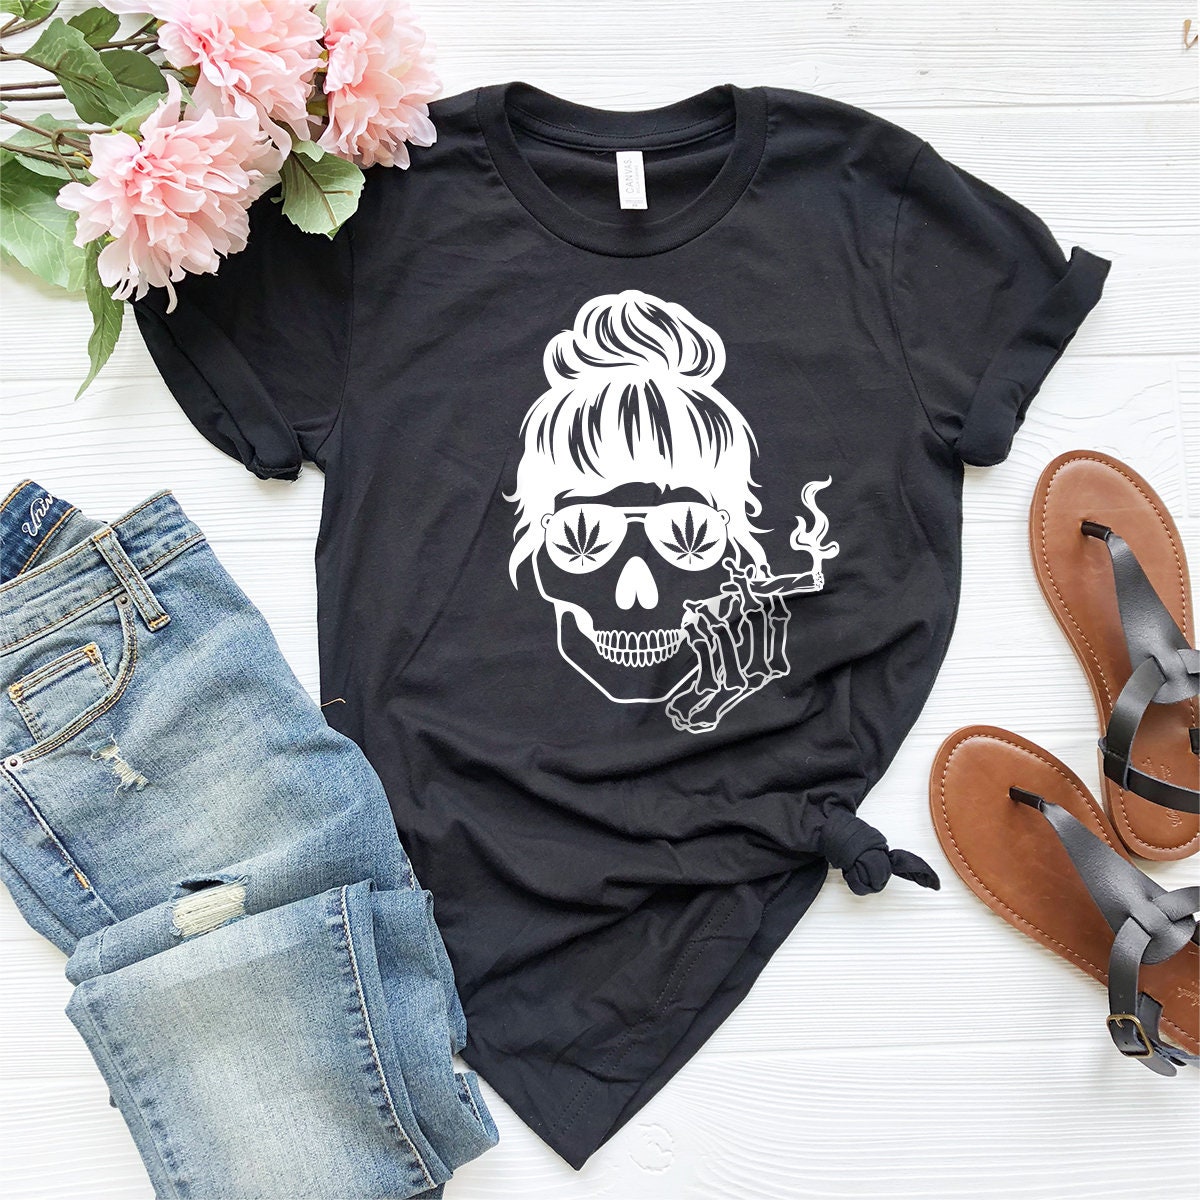 Bun Hair Skull Smoking Shirt, Weed Shirt for women, Smoking Skull, Funny Weed T Shirt, Funny Pothead Shirt,Cannabis Shirt,Marijuana Shirt - Fastdeliverytees.com